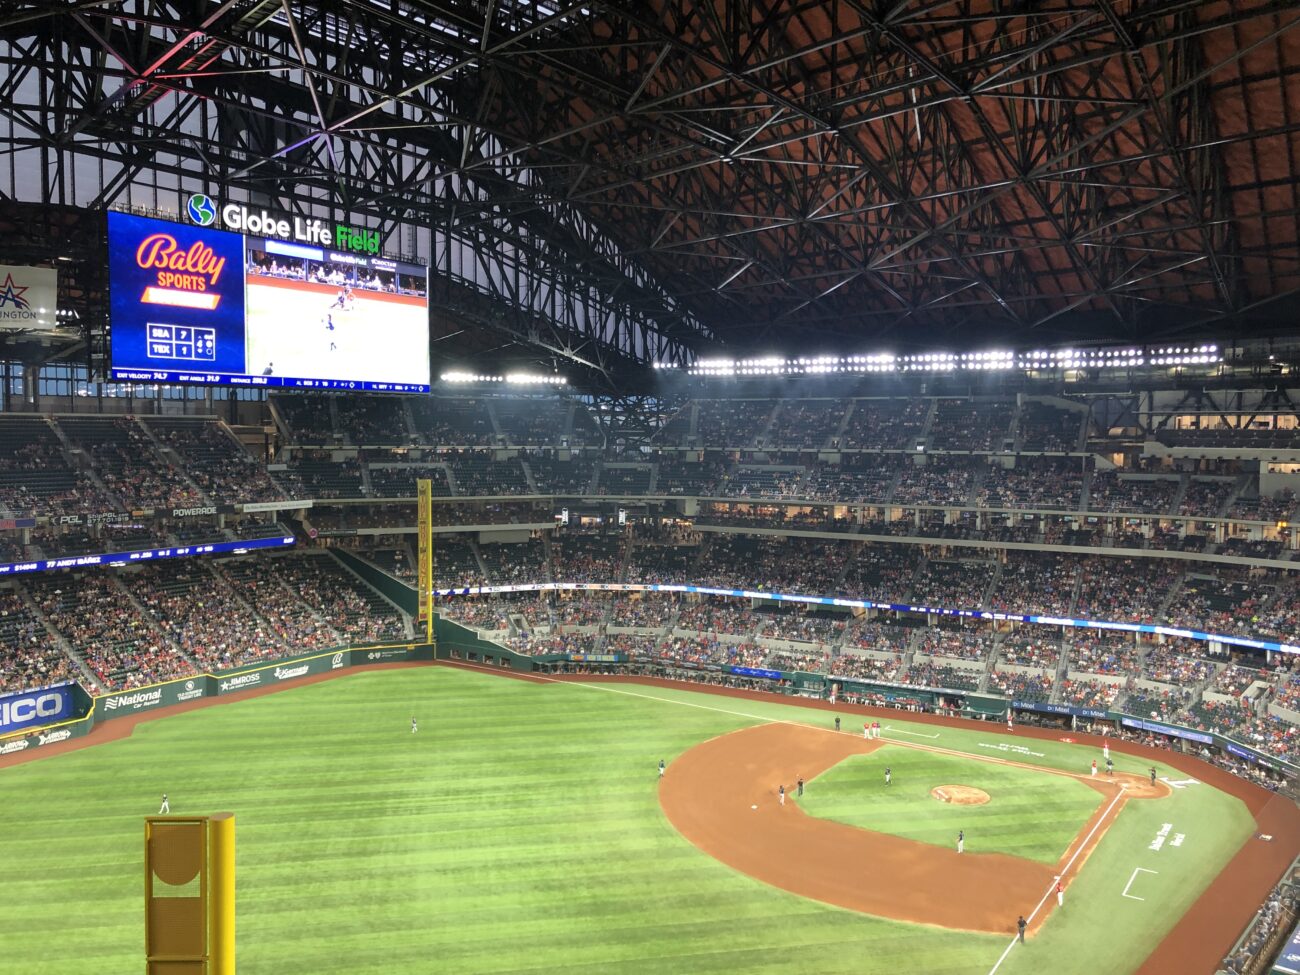 Globe Life Field, Home of the Texas Rangers - SportsRec